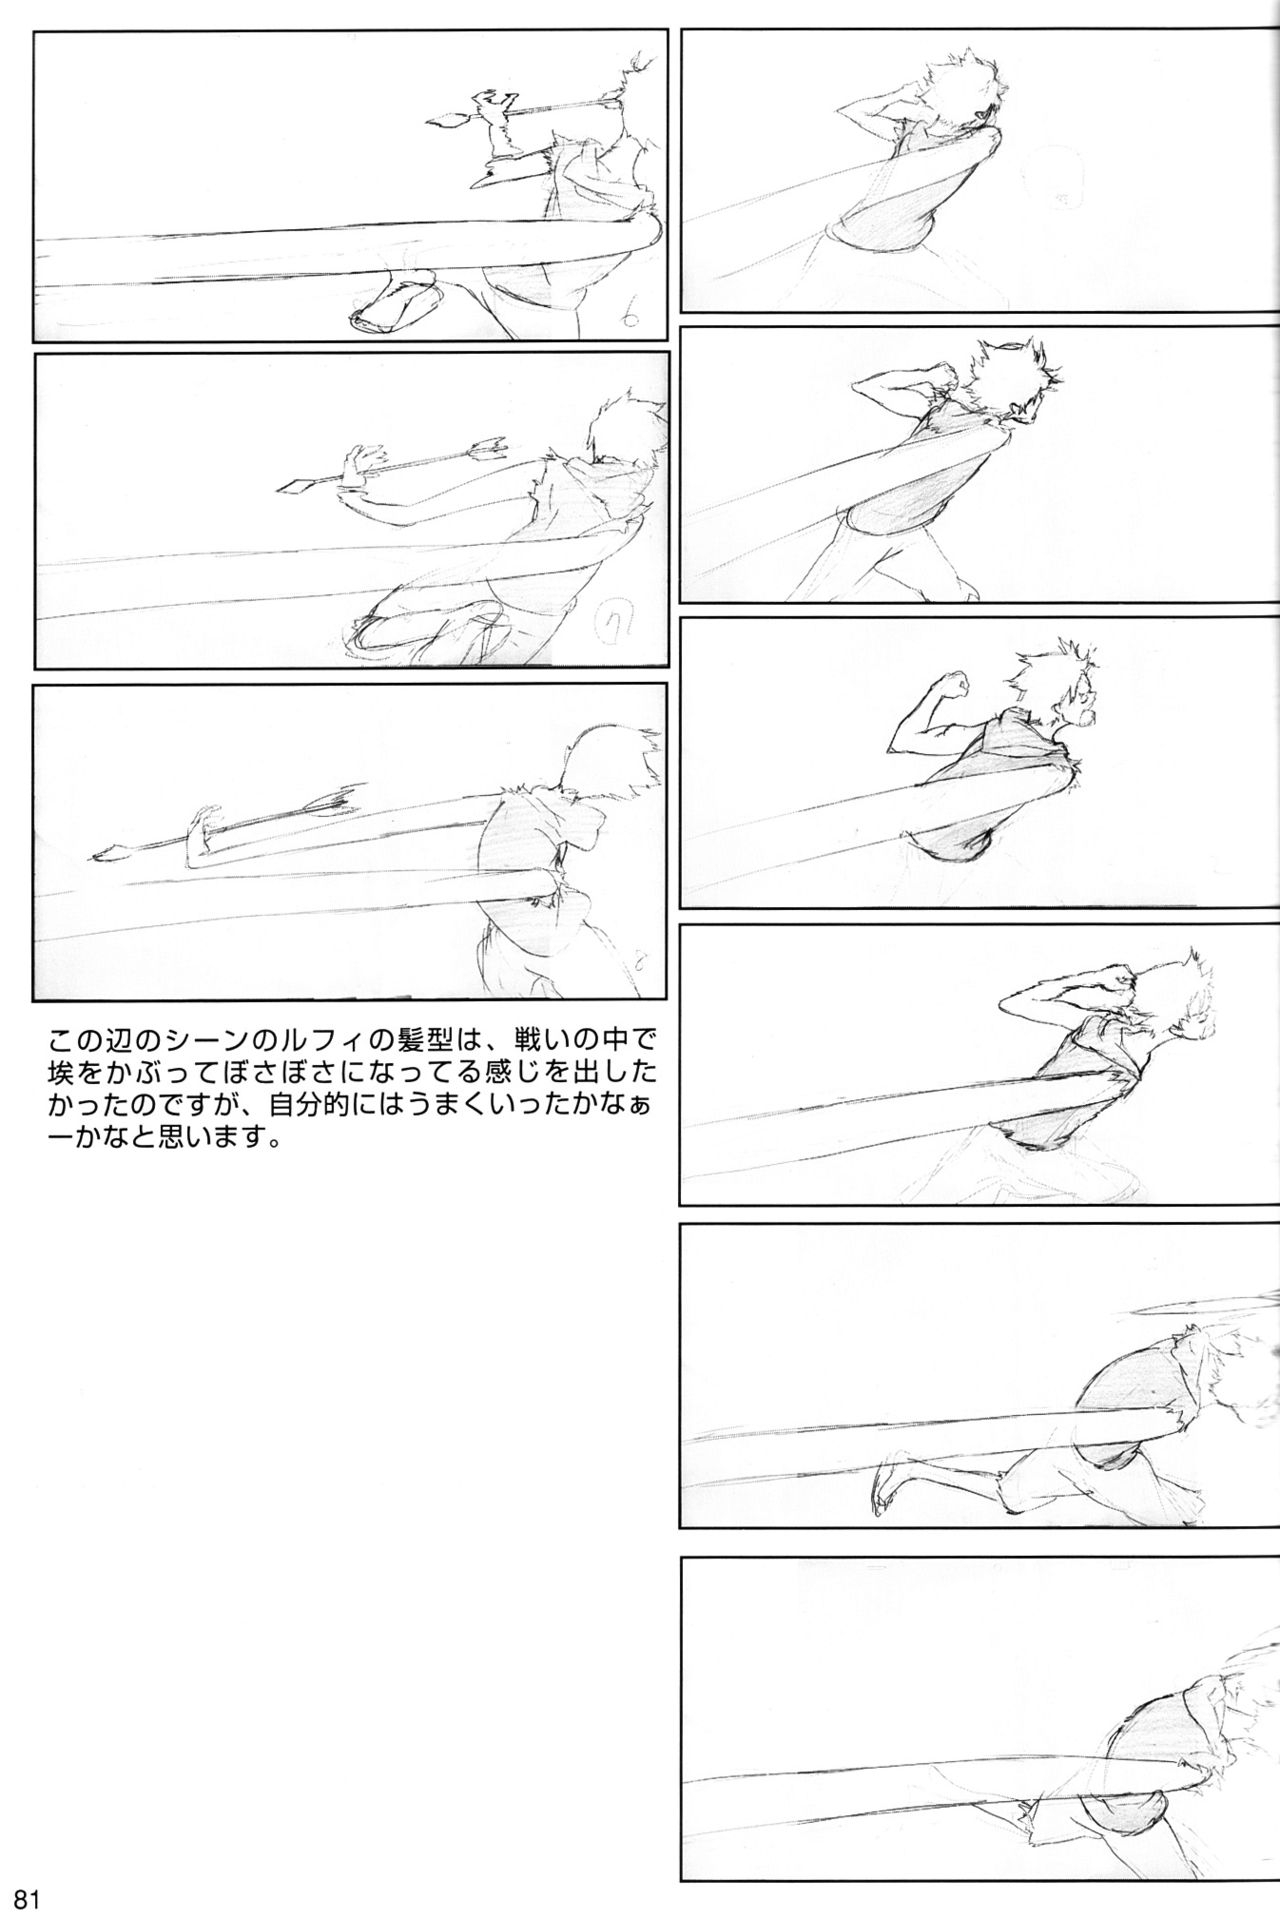 [Artbook] Sushio One Piece Movie 06 - Pencil Test and Design Book 79